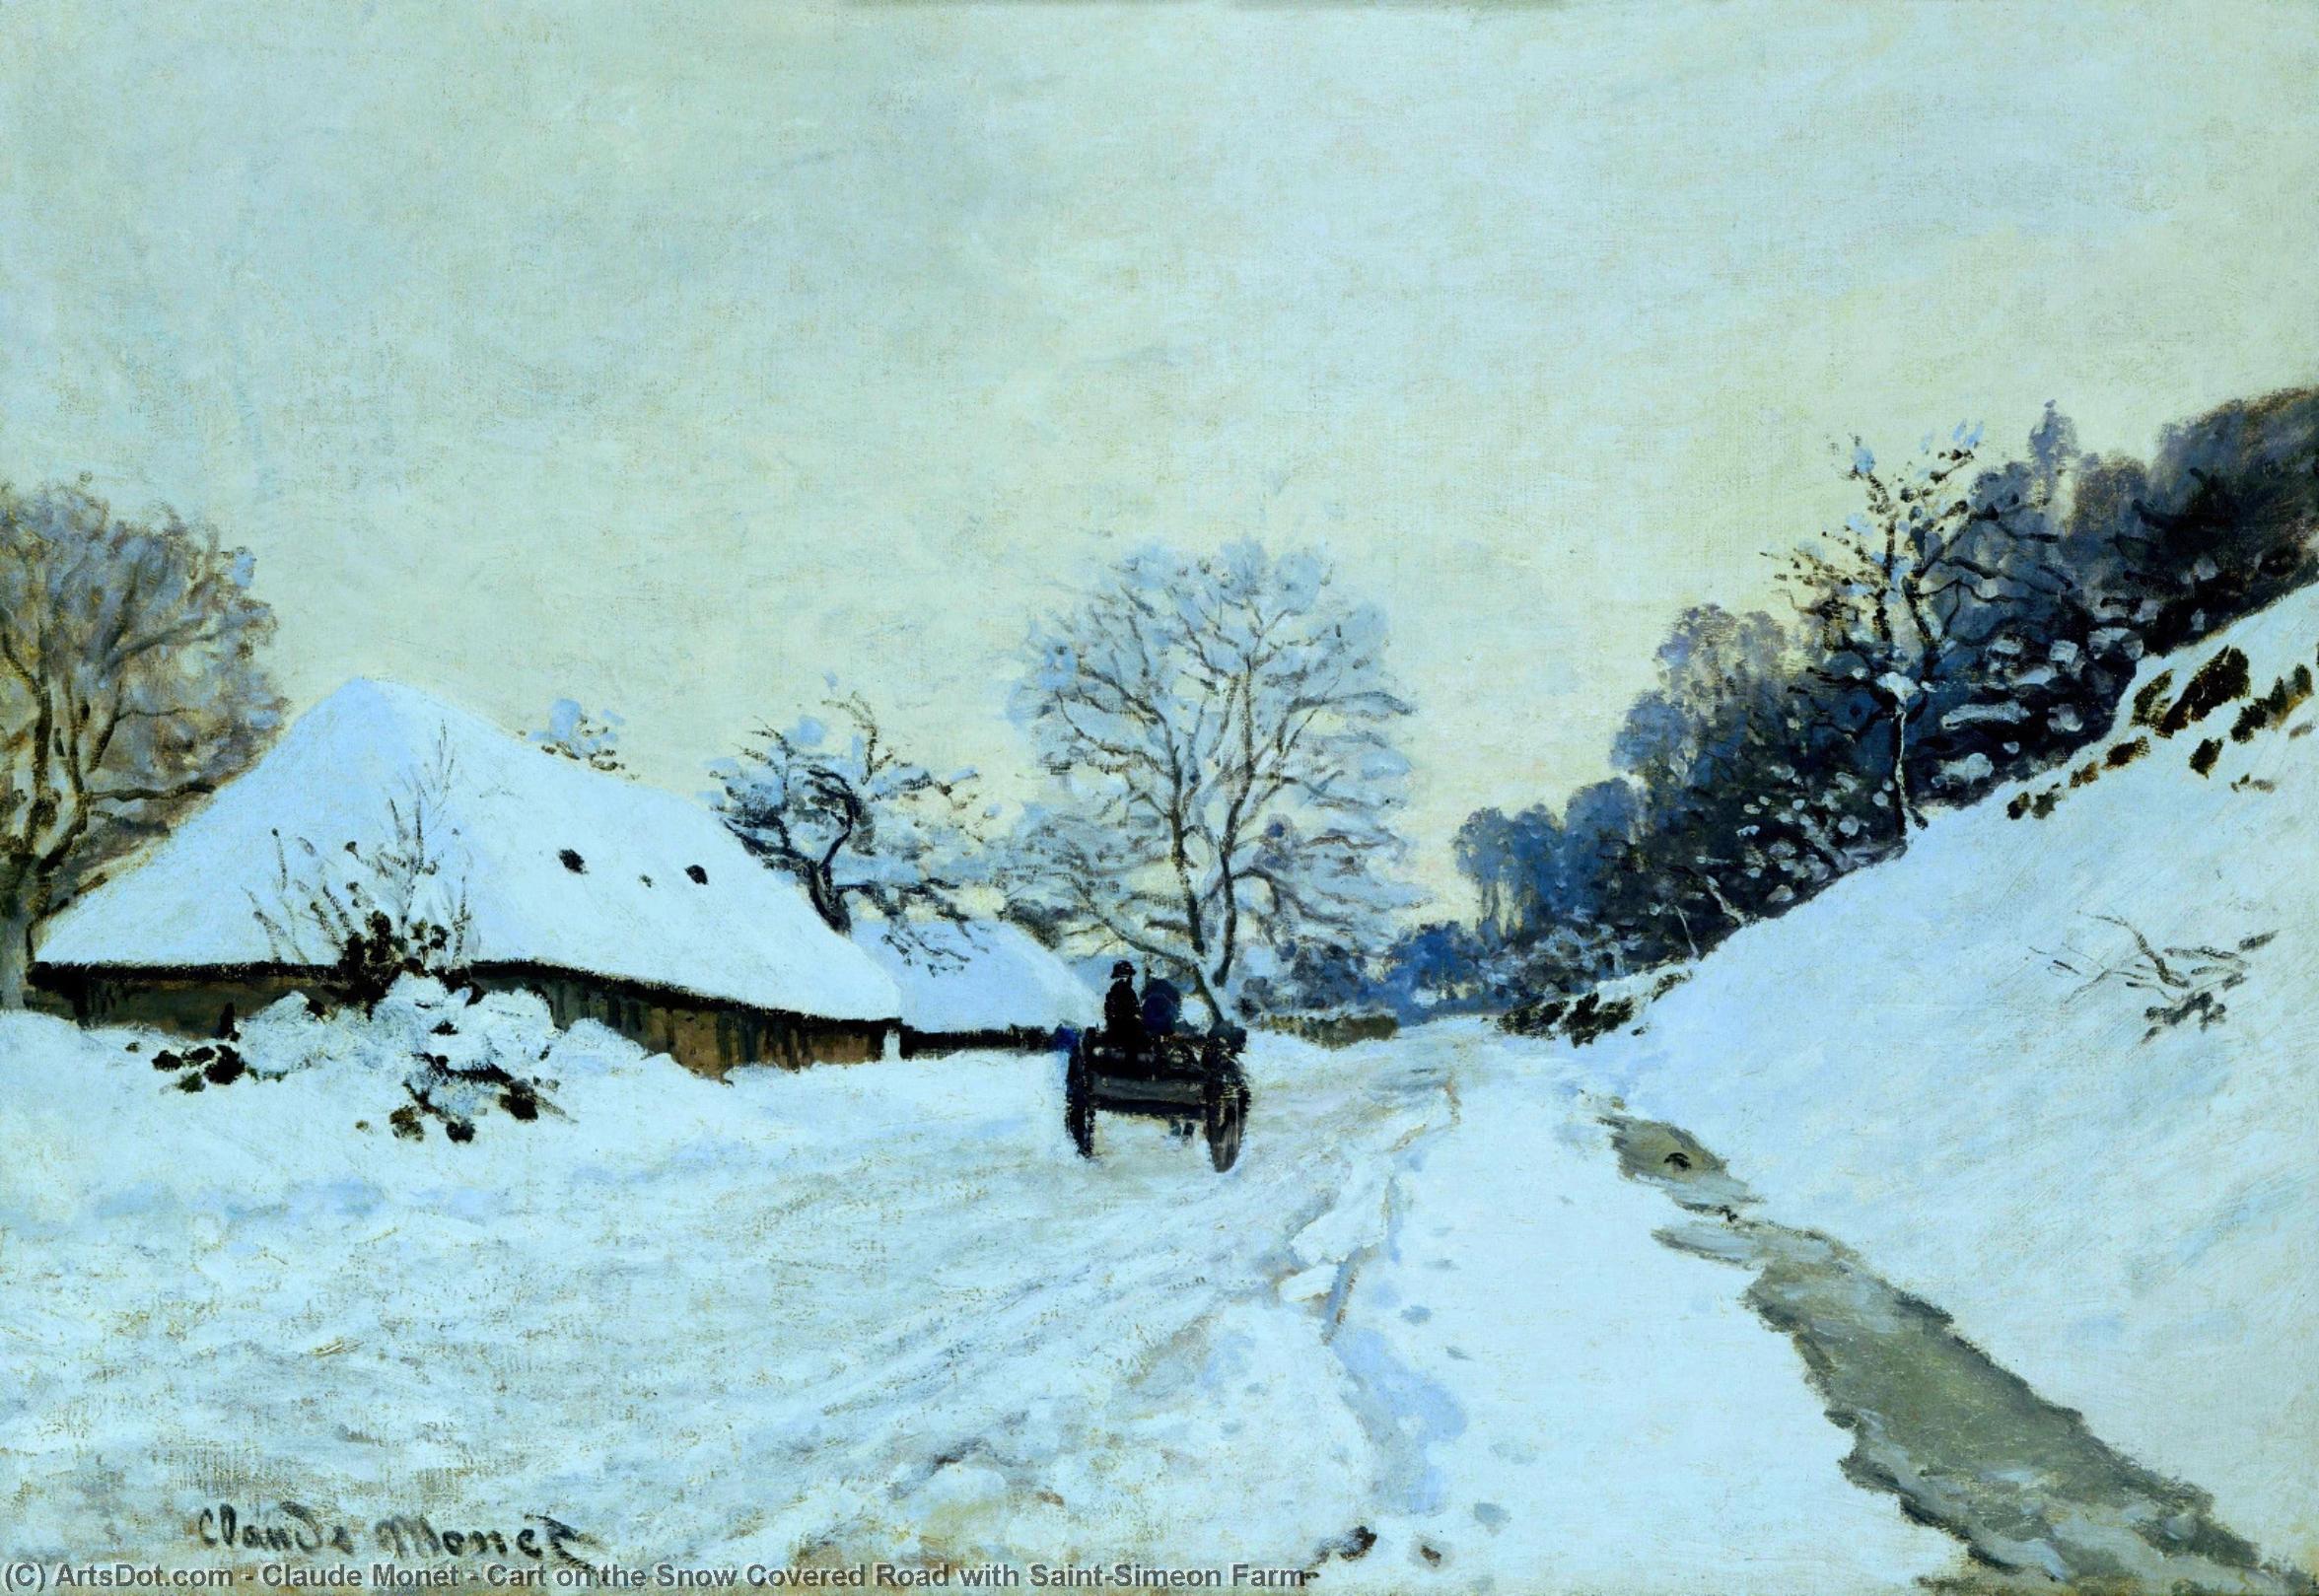 Order Artwork Replica Cart on the Snow Covered Road with Saint-Simeon Farm, 1865 by Claude Monet (1840-1926, France) | ArtsDot.com